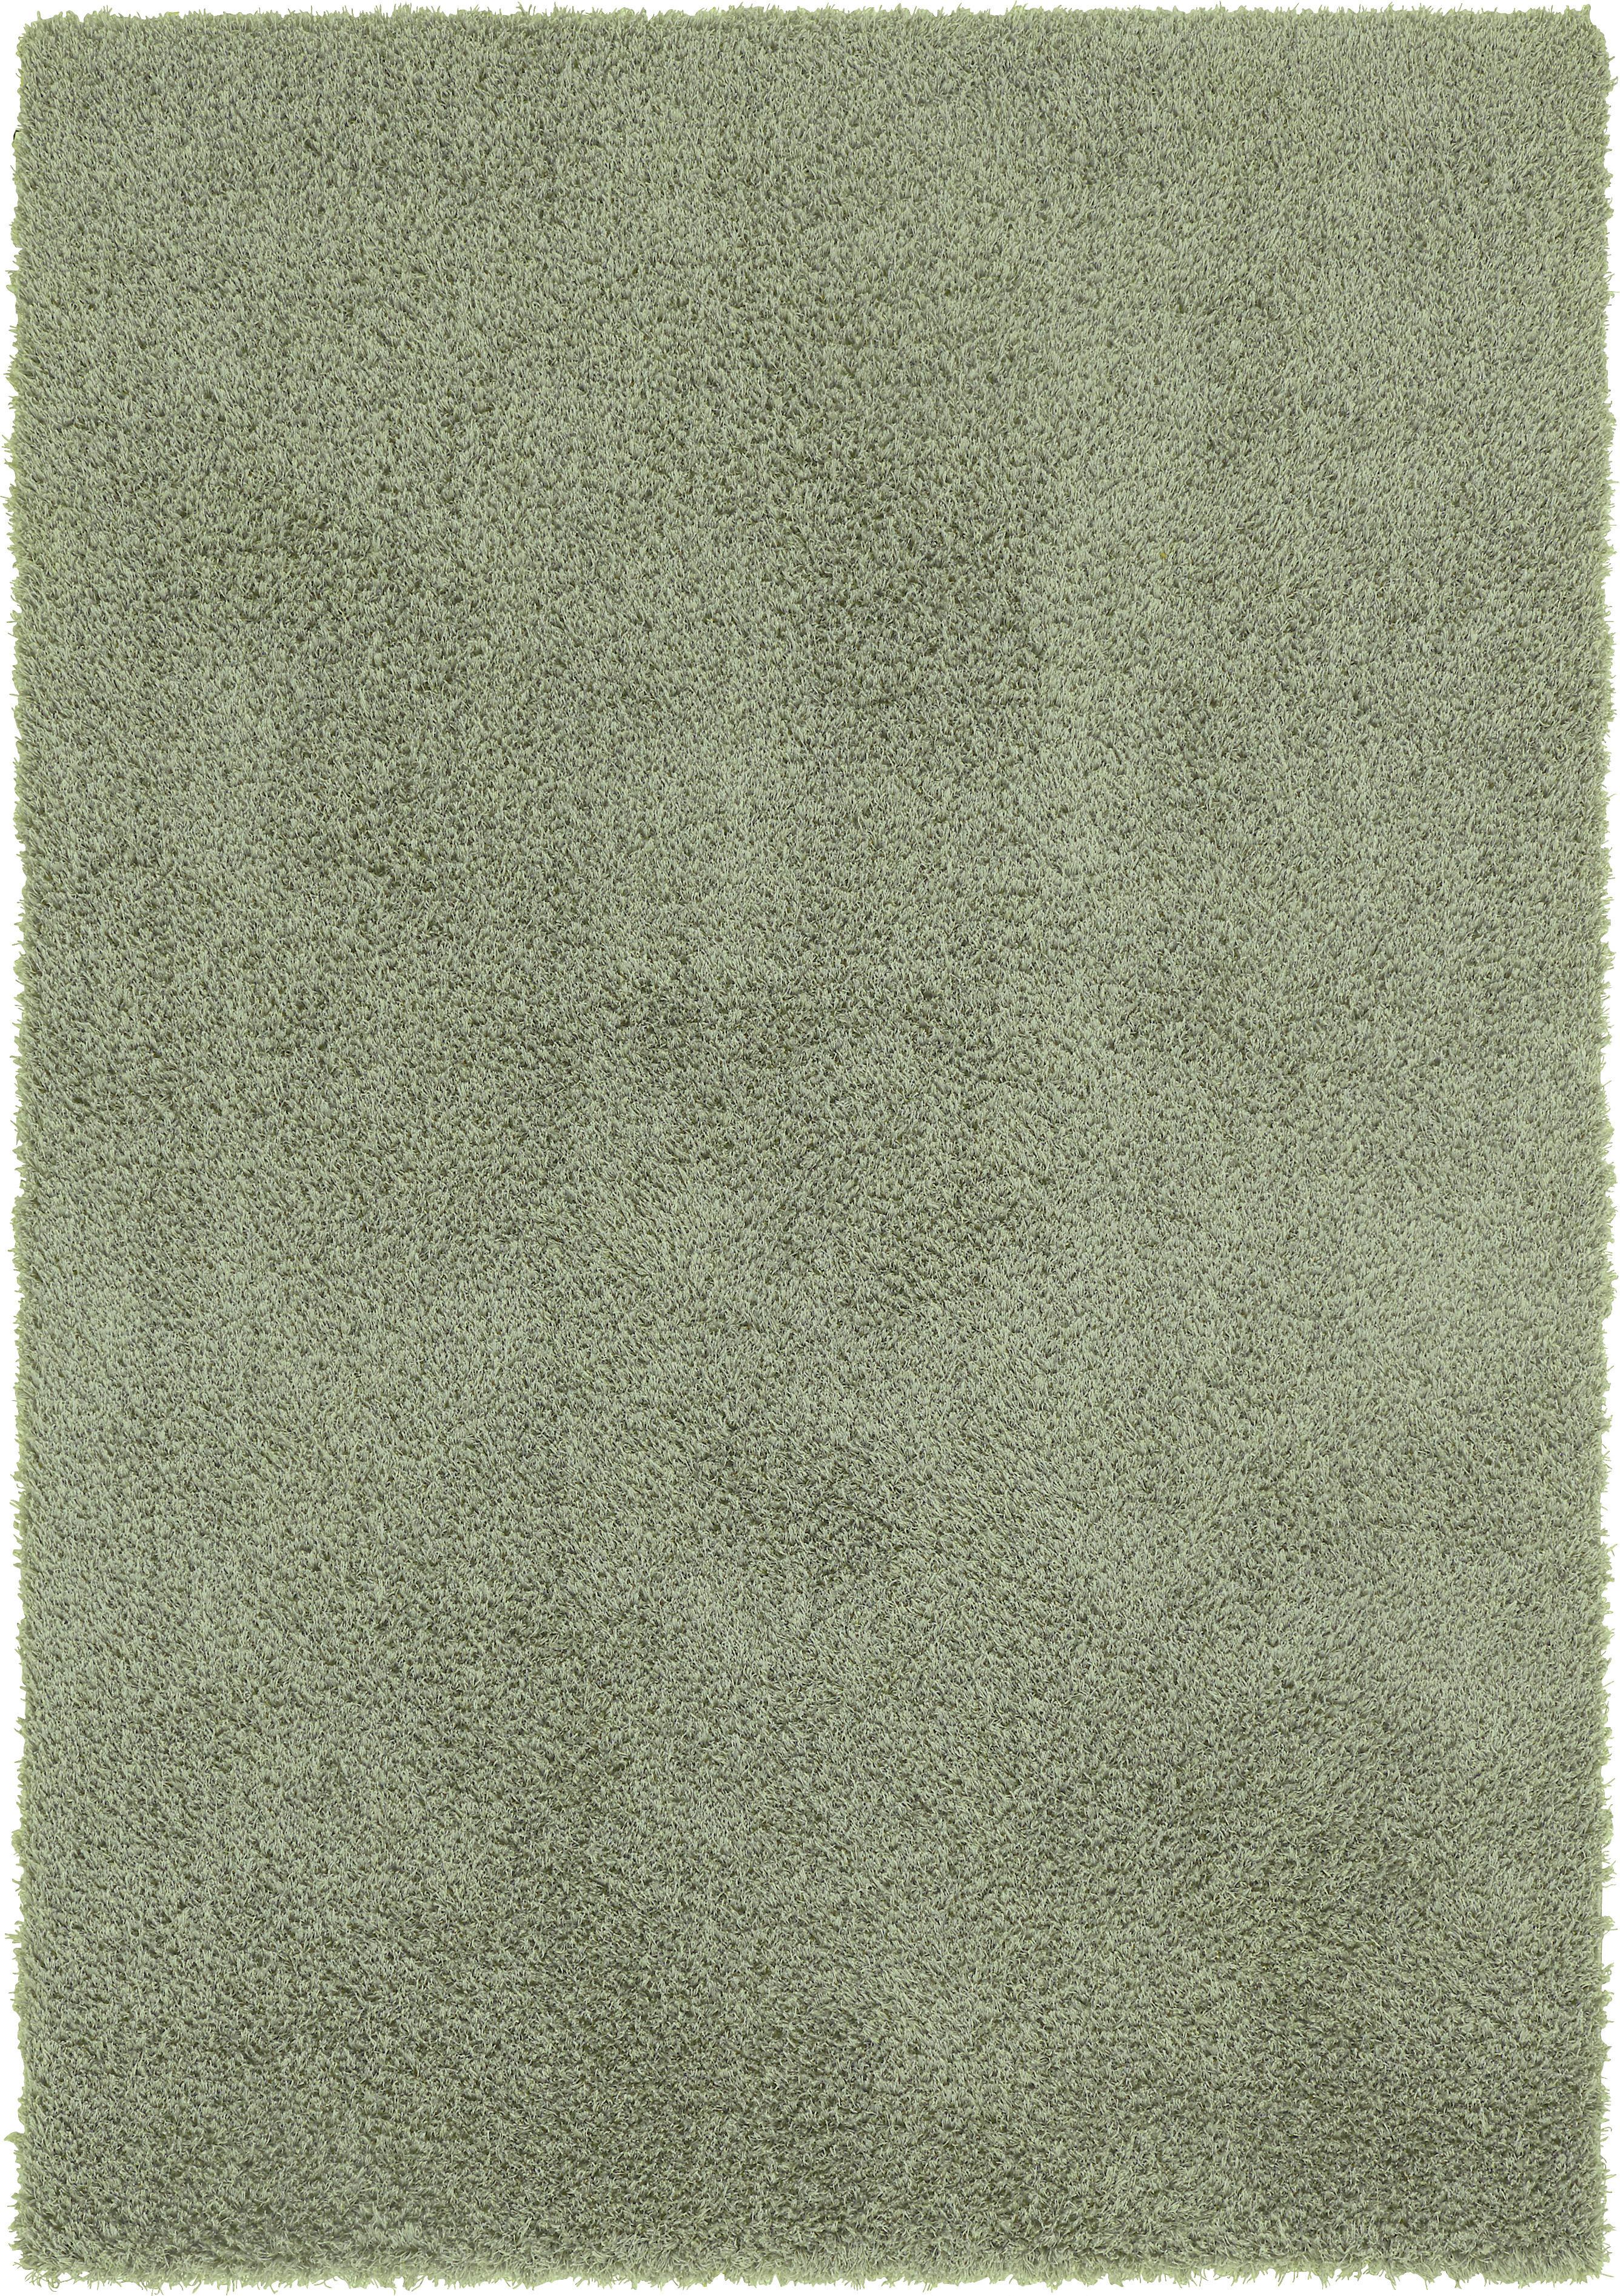 Shaggy Stefan in Grün ca. 80x150cm - Grün, MODERN, Textil (80/150cm) - Modern Living